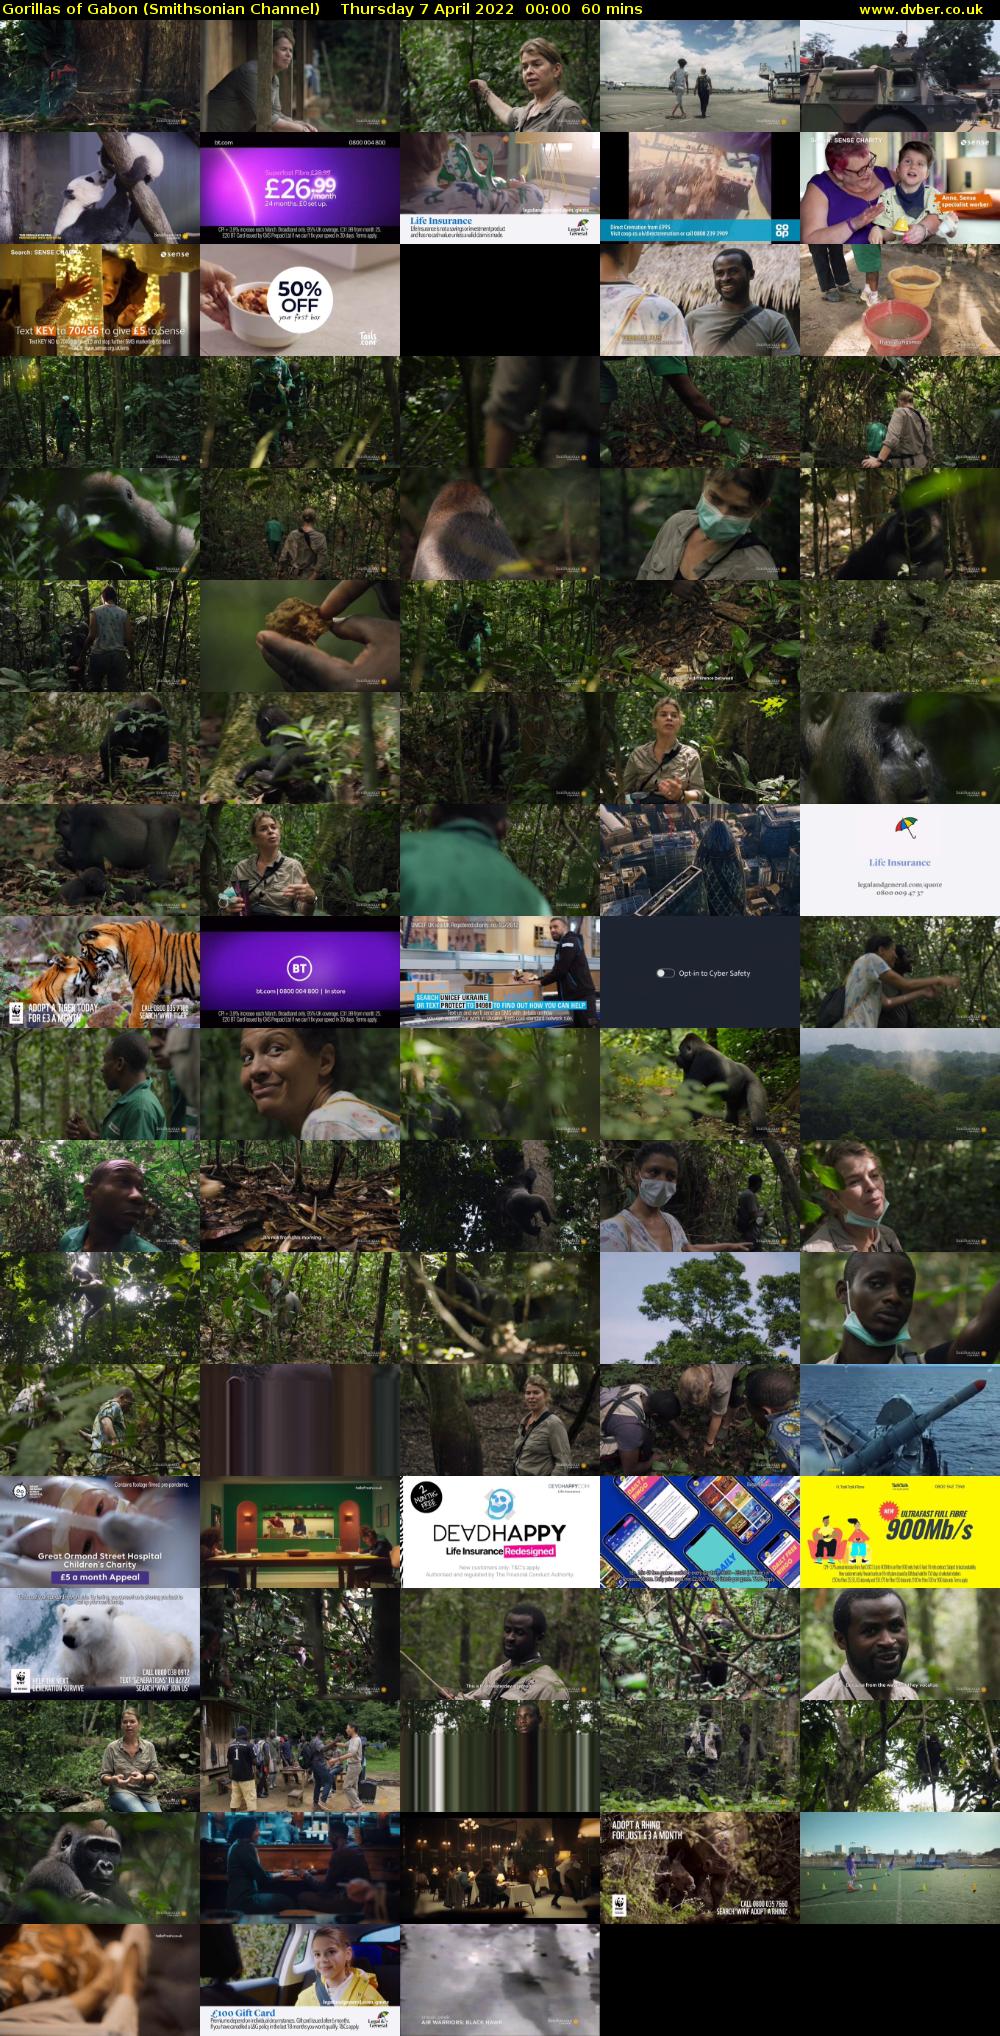 Gorillas of Gabon (Smithsonian Channel) Thursday 7 April 2022 00:00 - 01:00